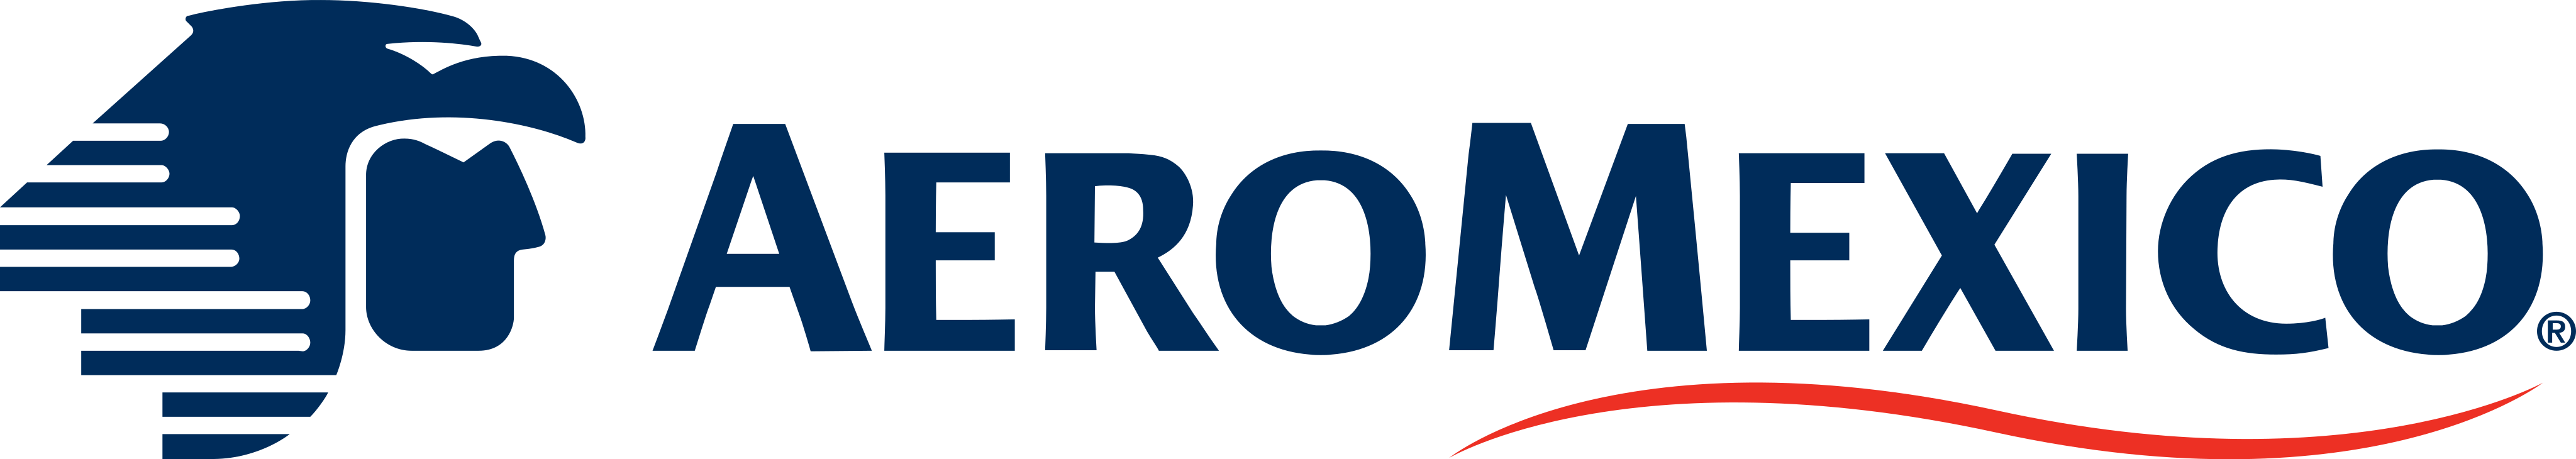 Aeromexico Logo.